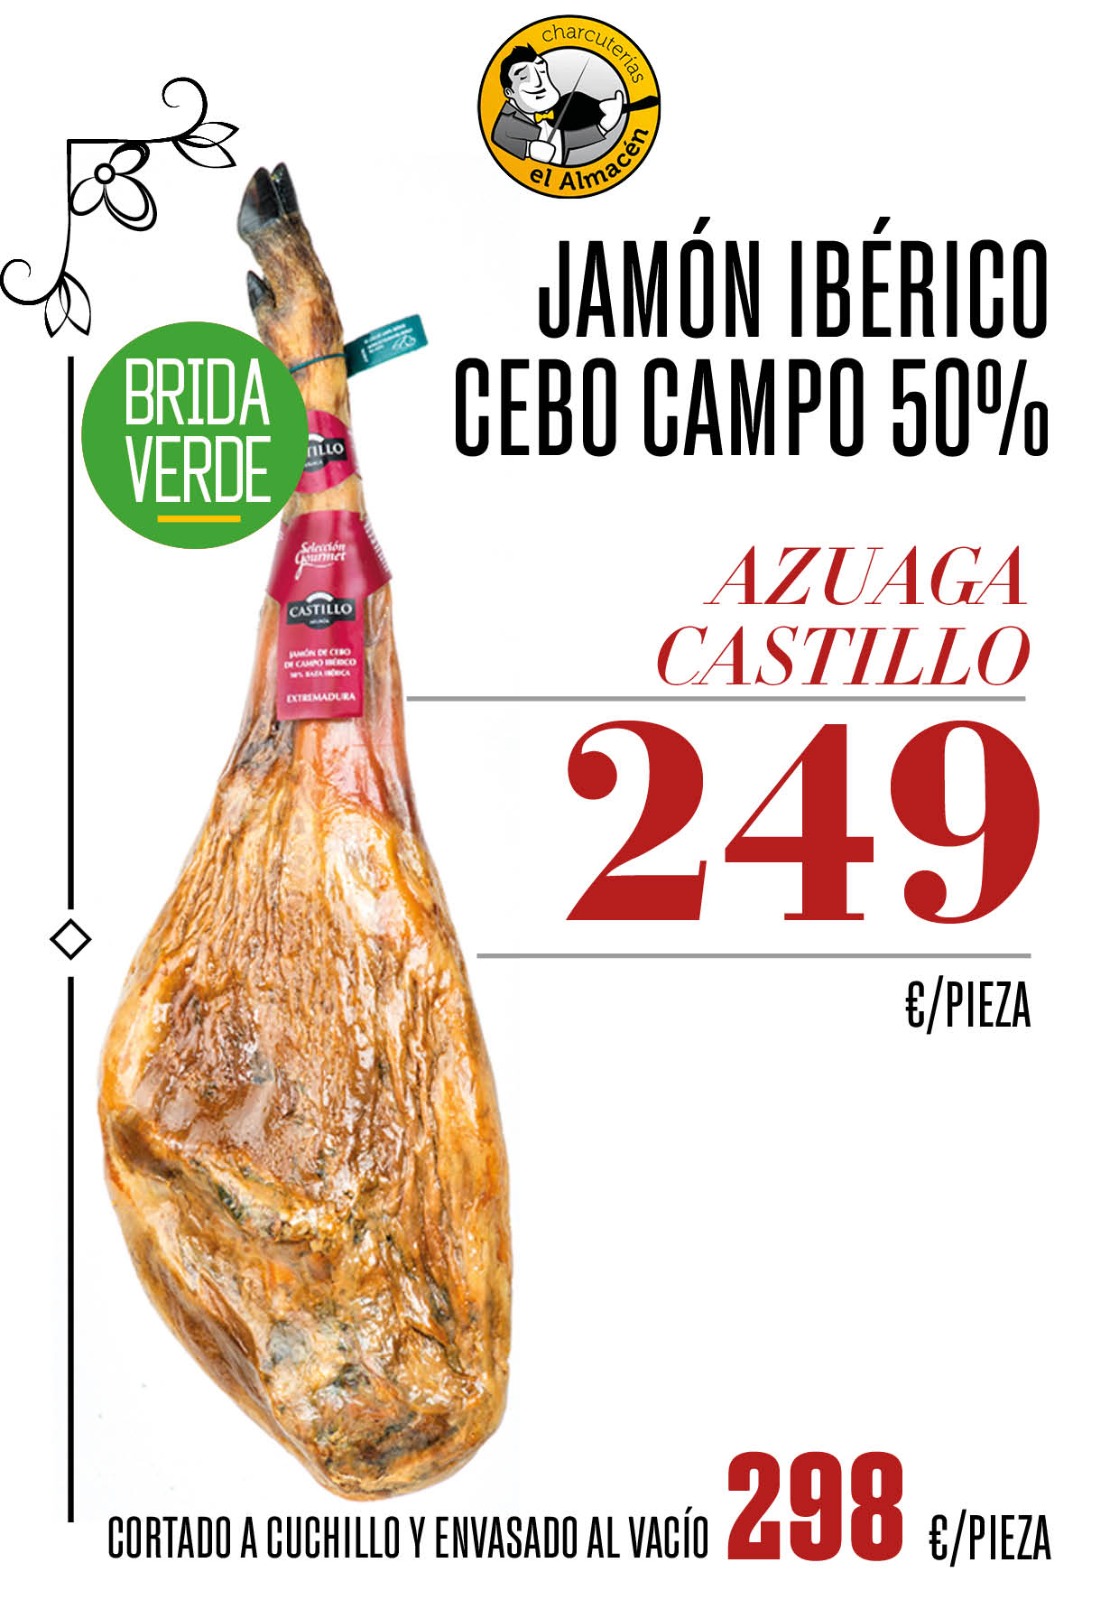 Jamón Iberico, Jamón Iberico de Cebo, Jamón Iberico de Cebo Salamanca